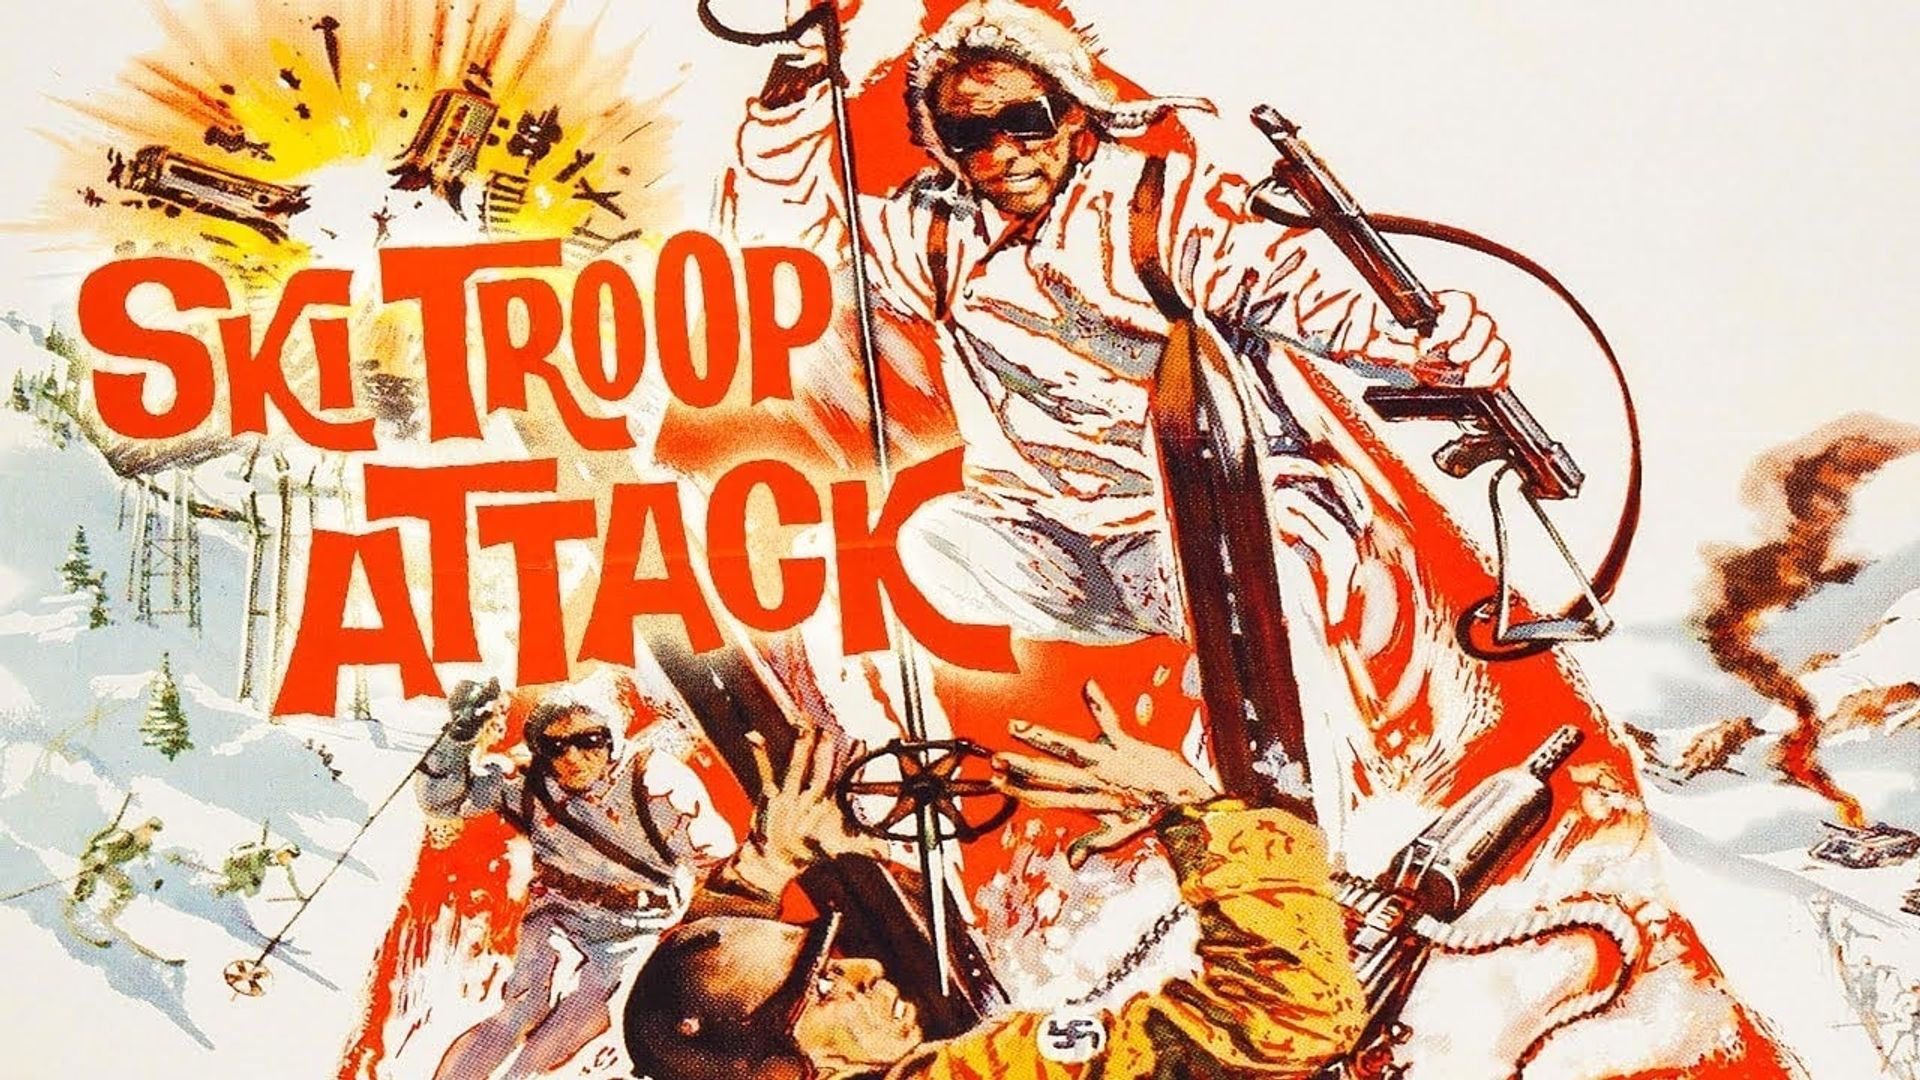 Ski Troop Attack background